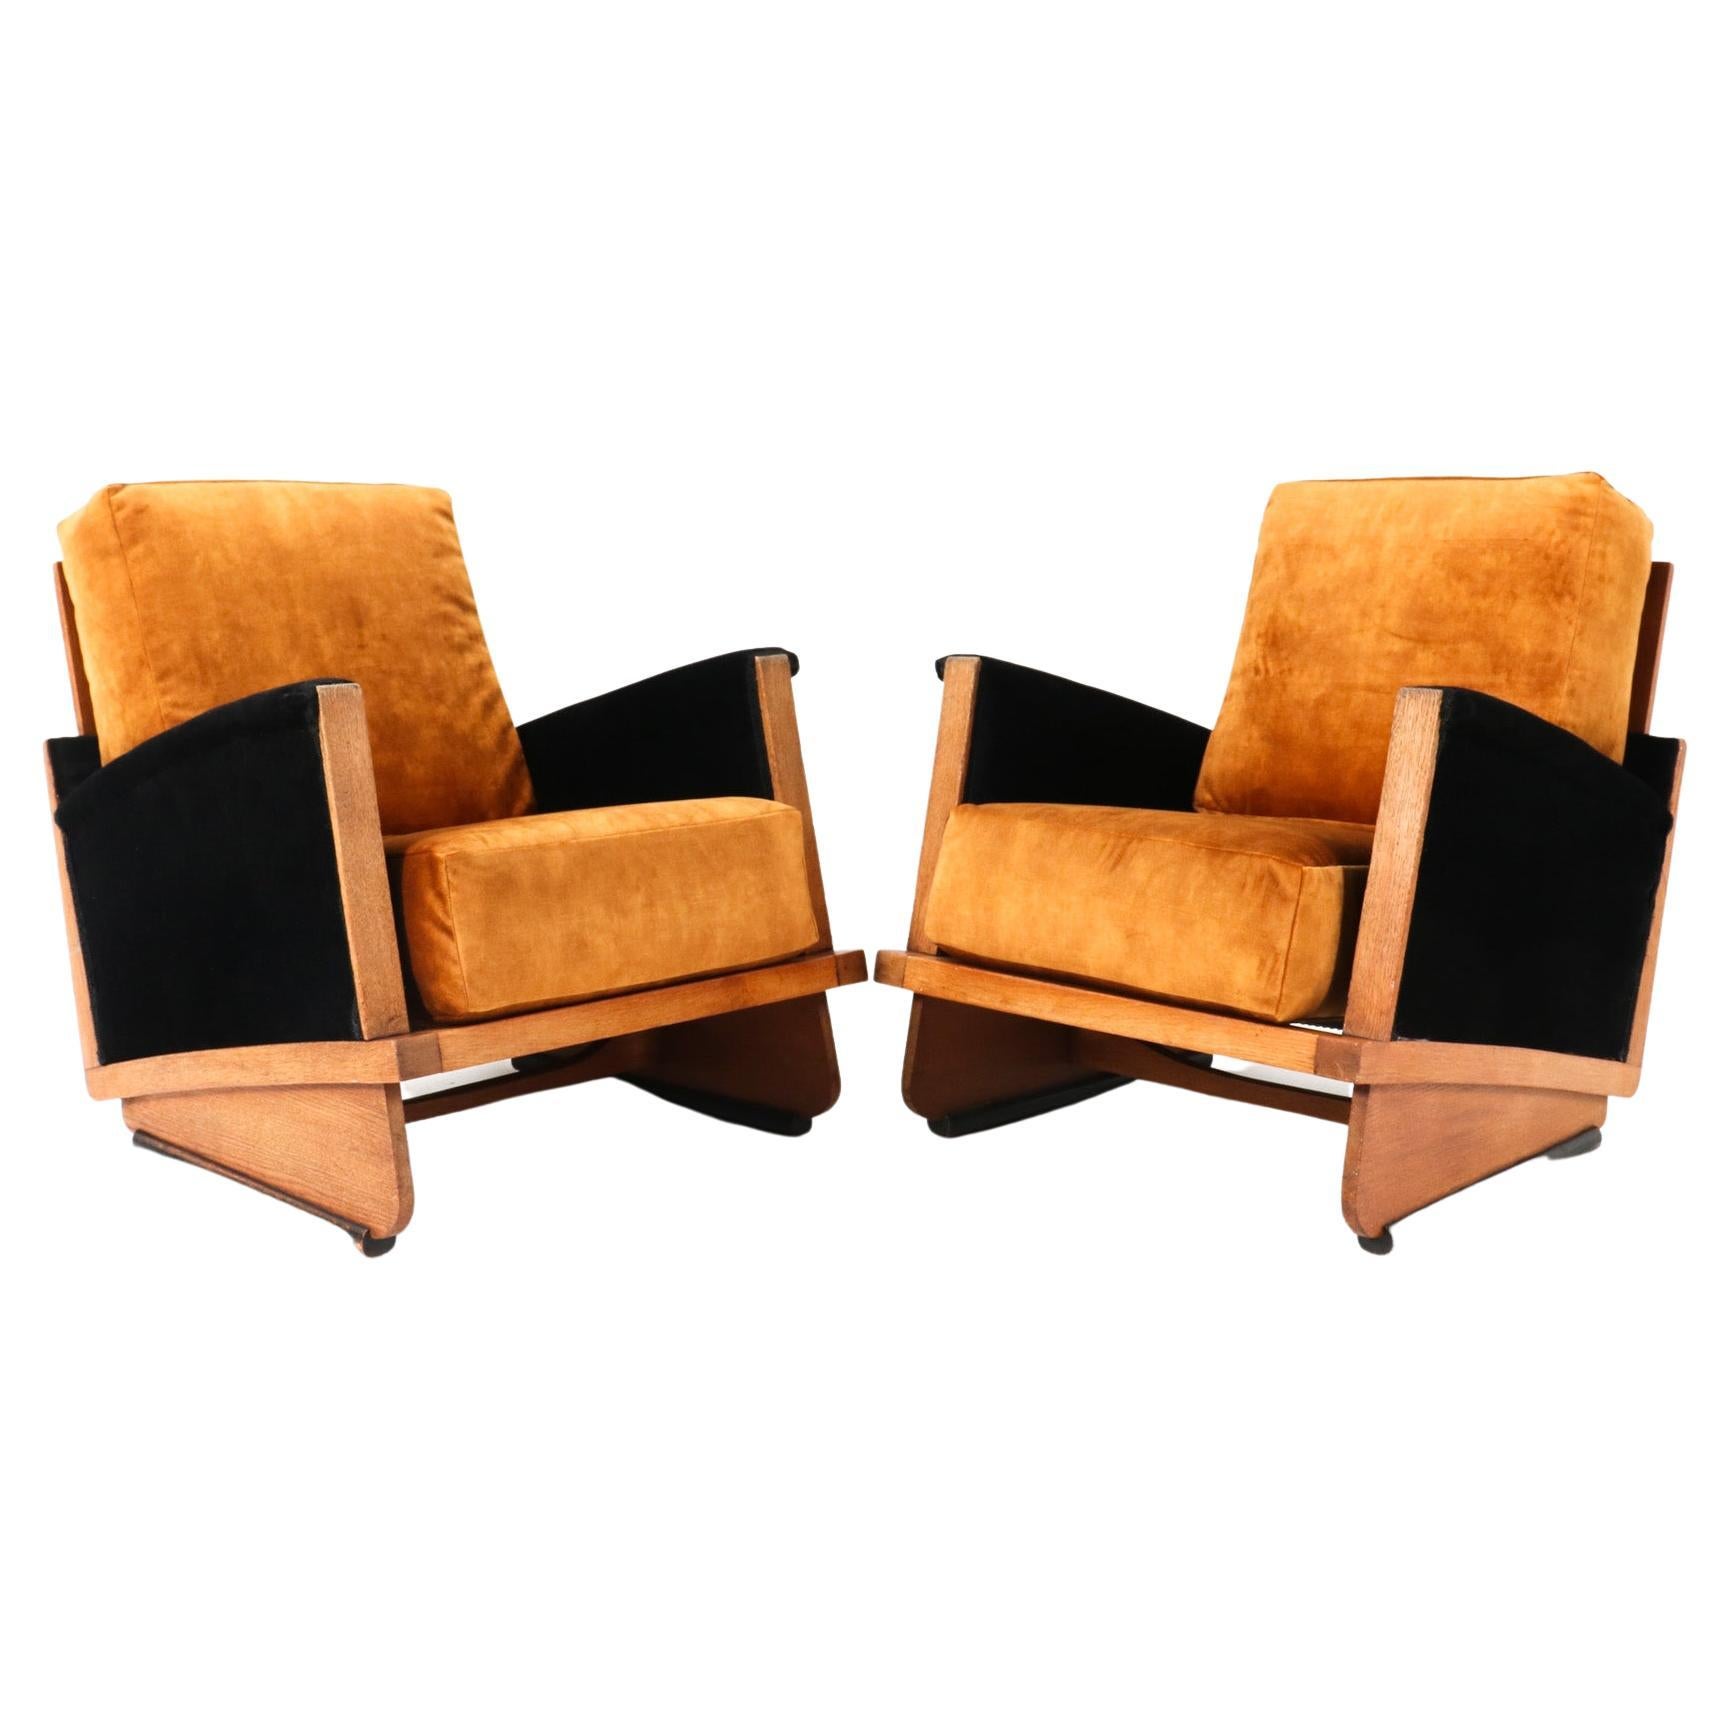 Two Oak Art Deco Modernist Lounge Chairs, 1920s